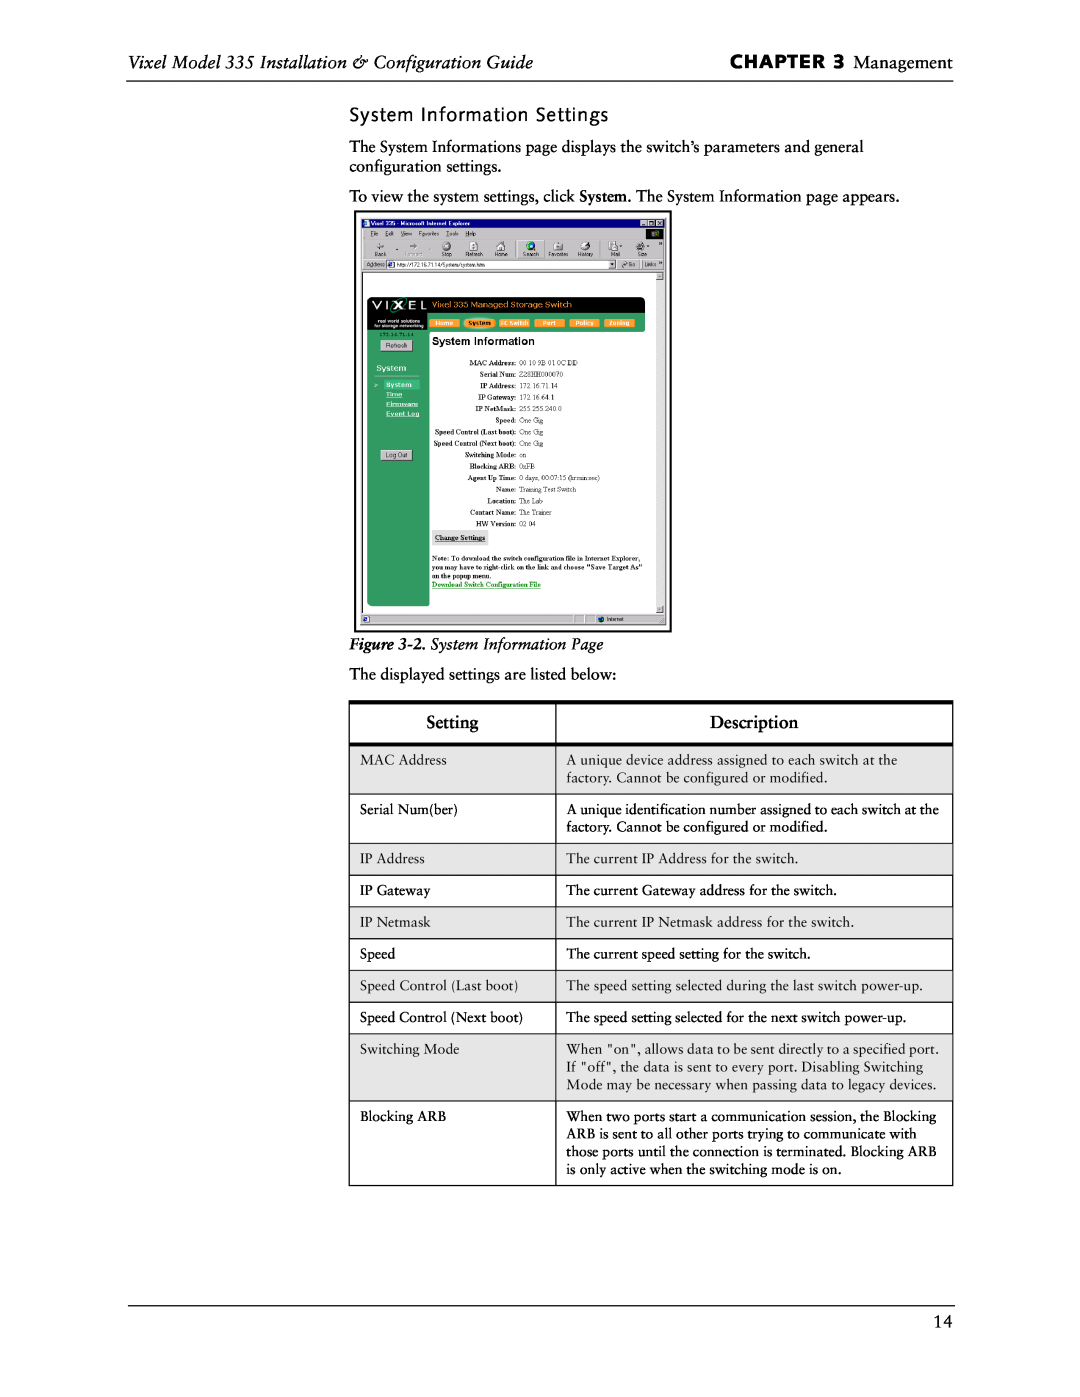 Vixel manual Management, System Information Settings, Vixel Model 335 Installation & Configuration Guide, Description 